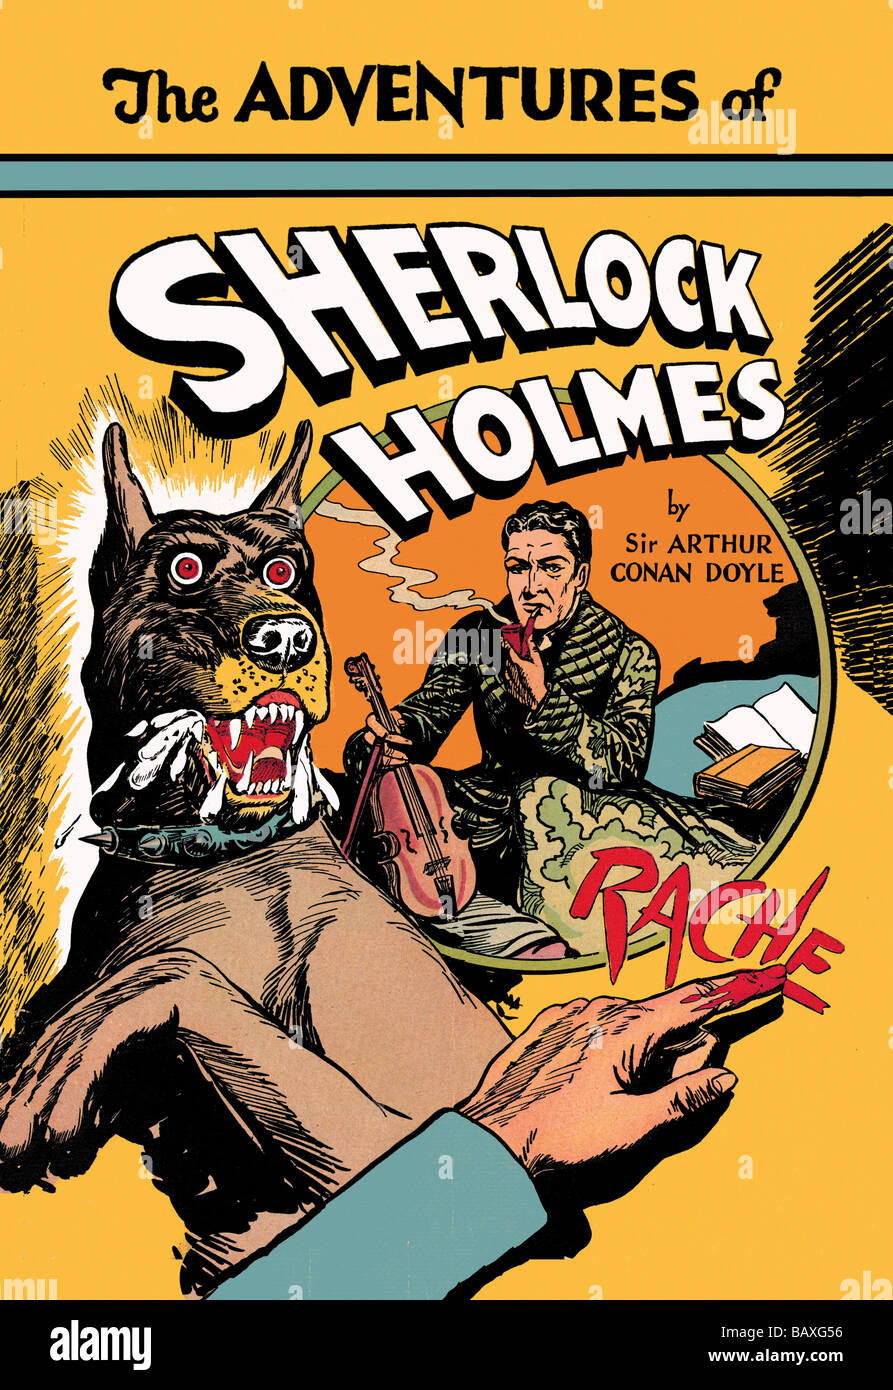 The Adventures of Sherlock Holmes #1 Stock Photo